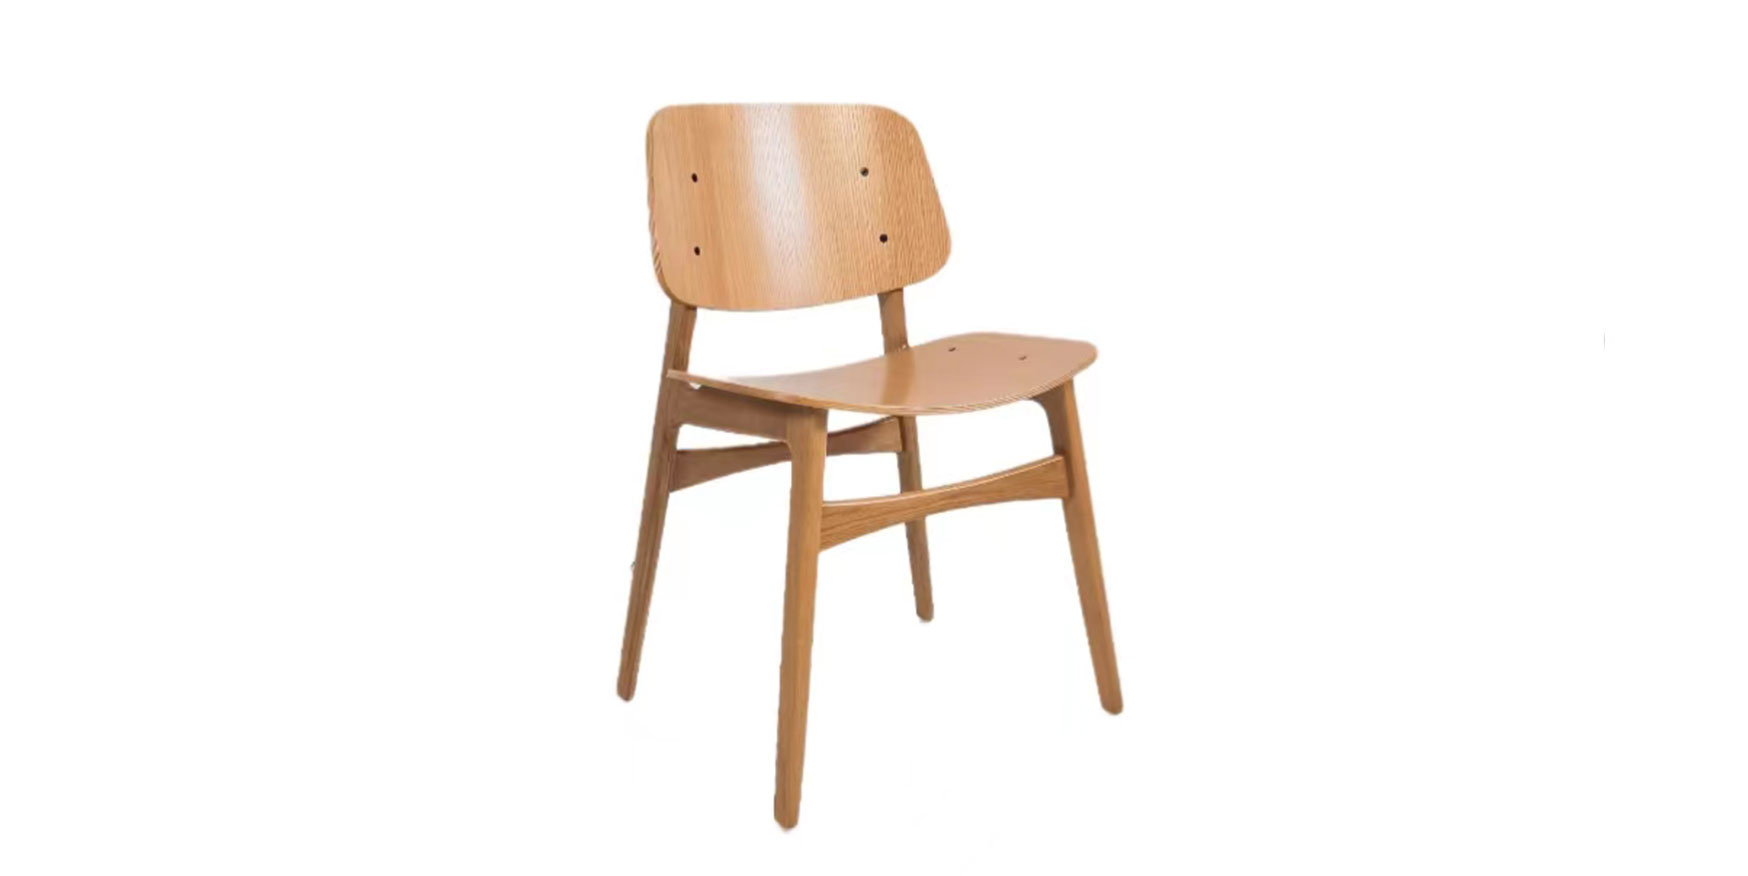 modern stools for kitchen island